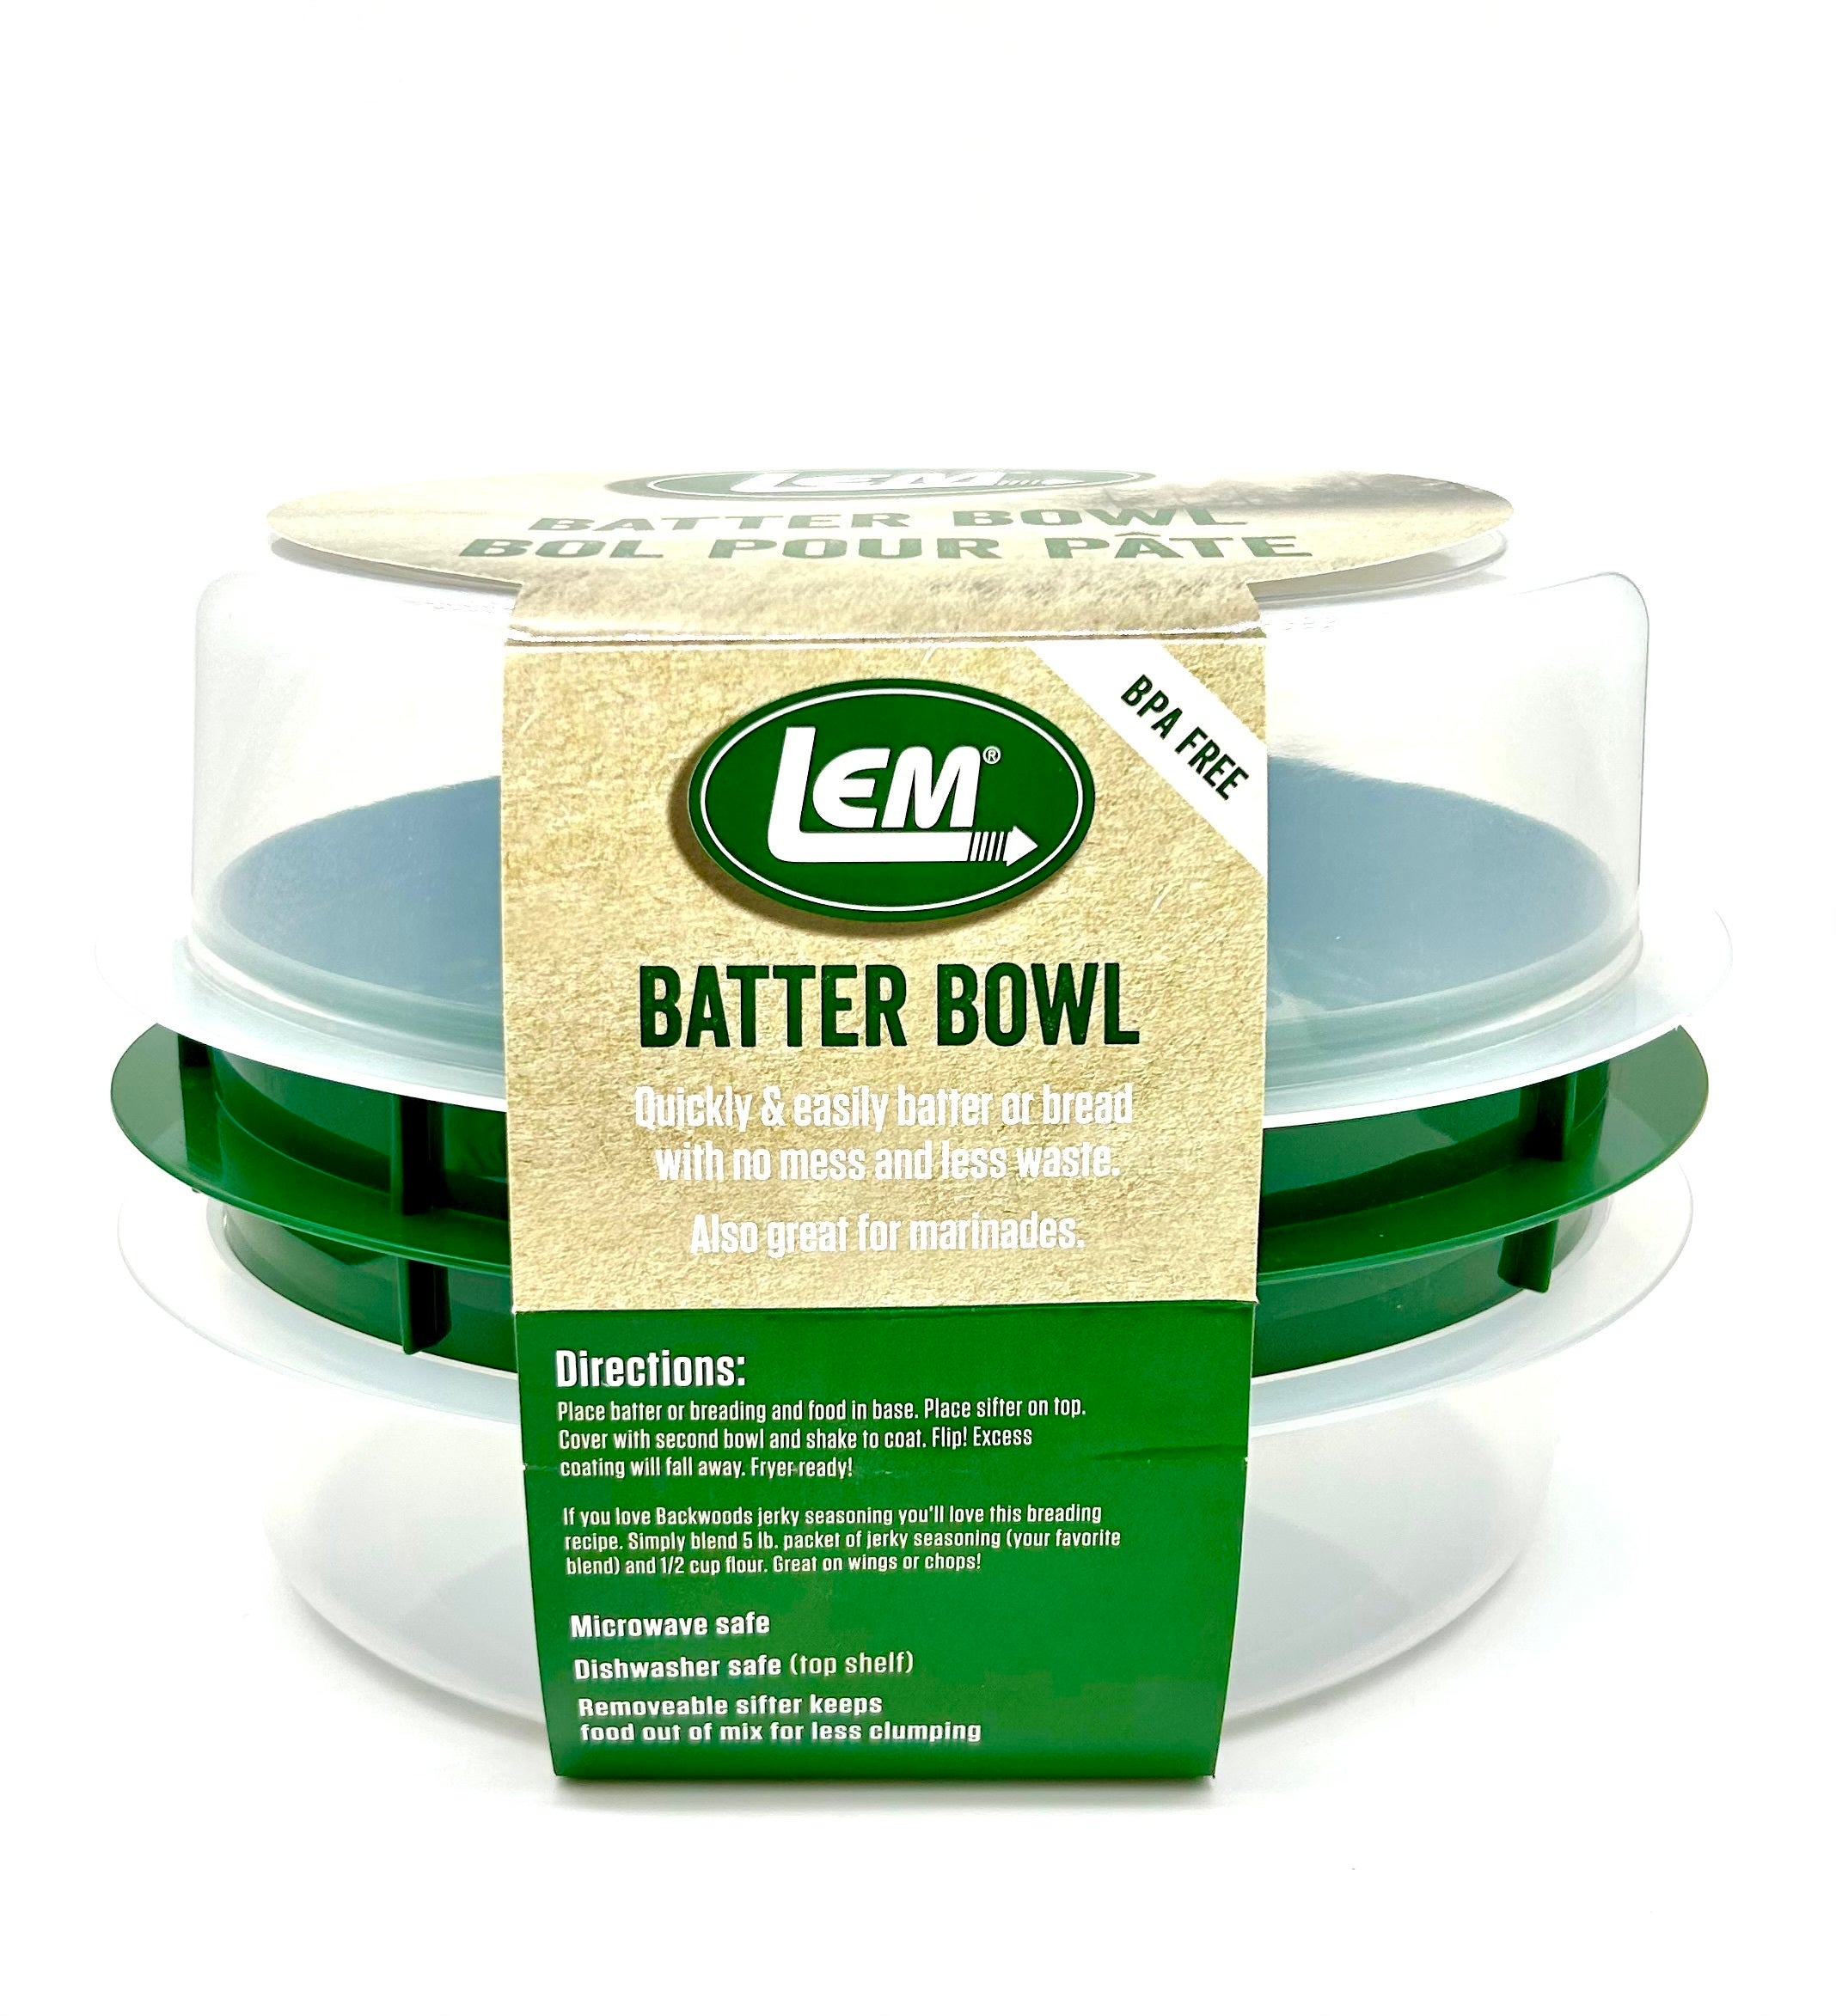 Lem Batter Bowl